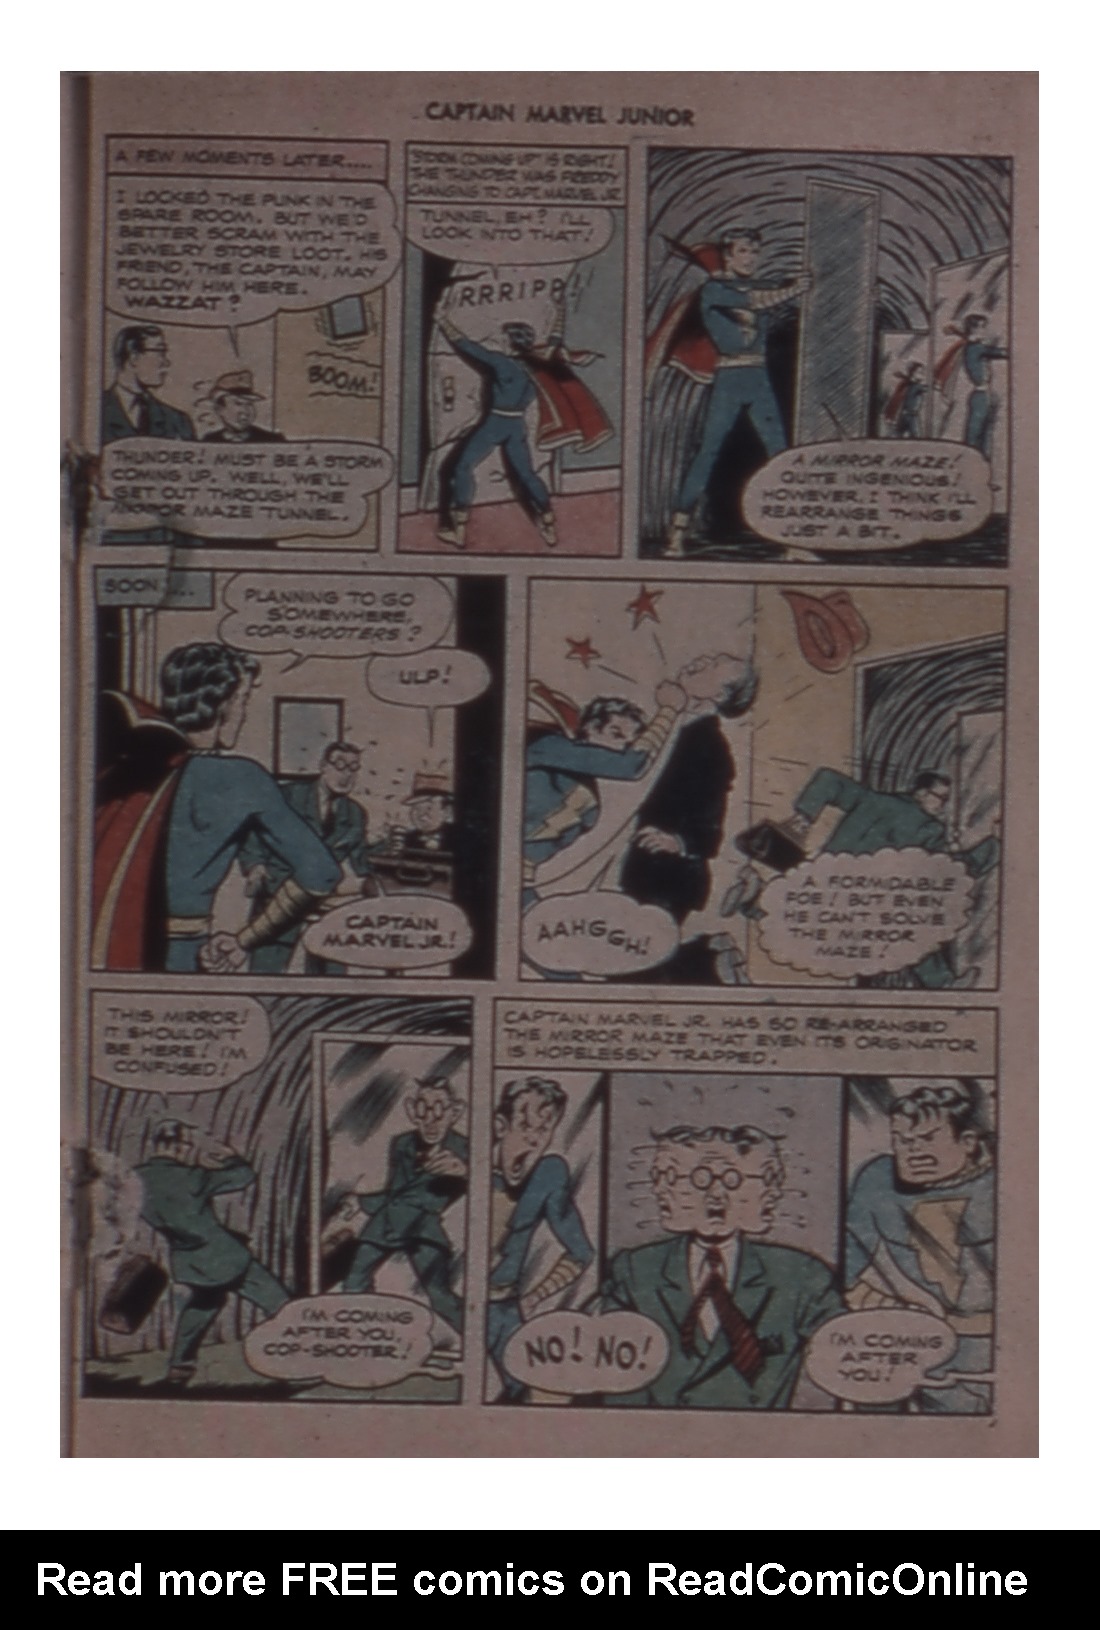 Read online Captain Marvel, Jr. comic -  Issue #58 - 31